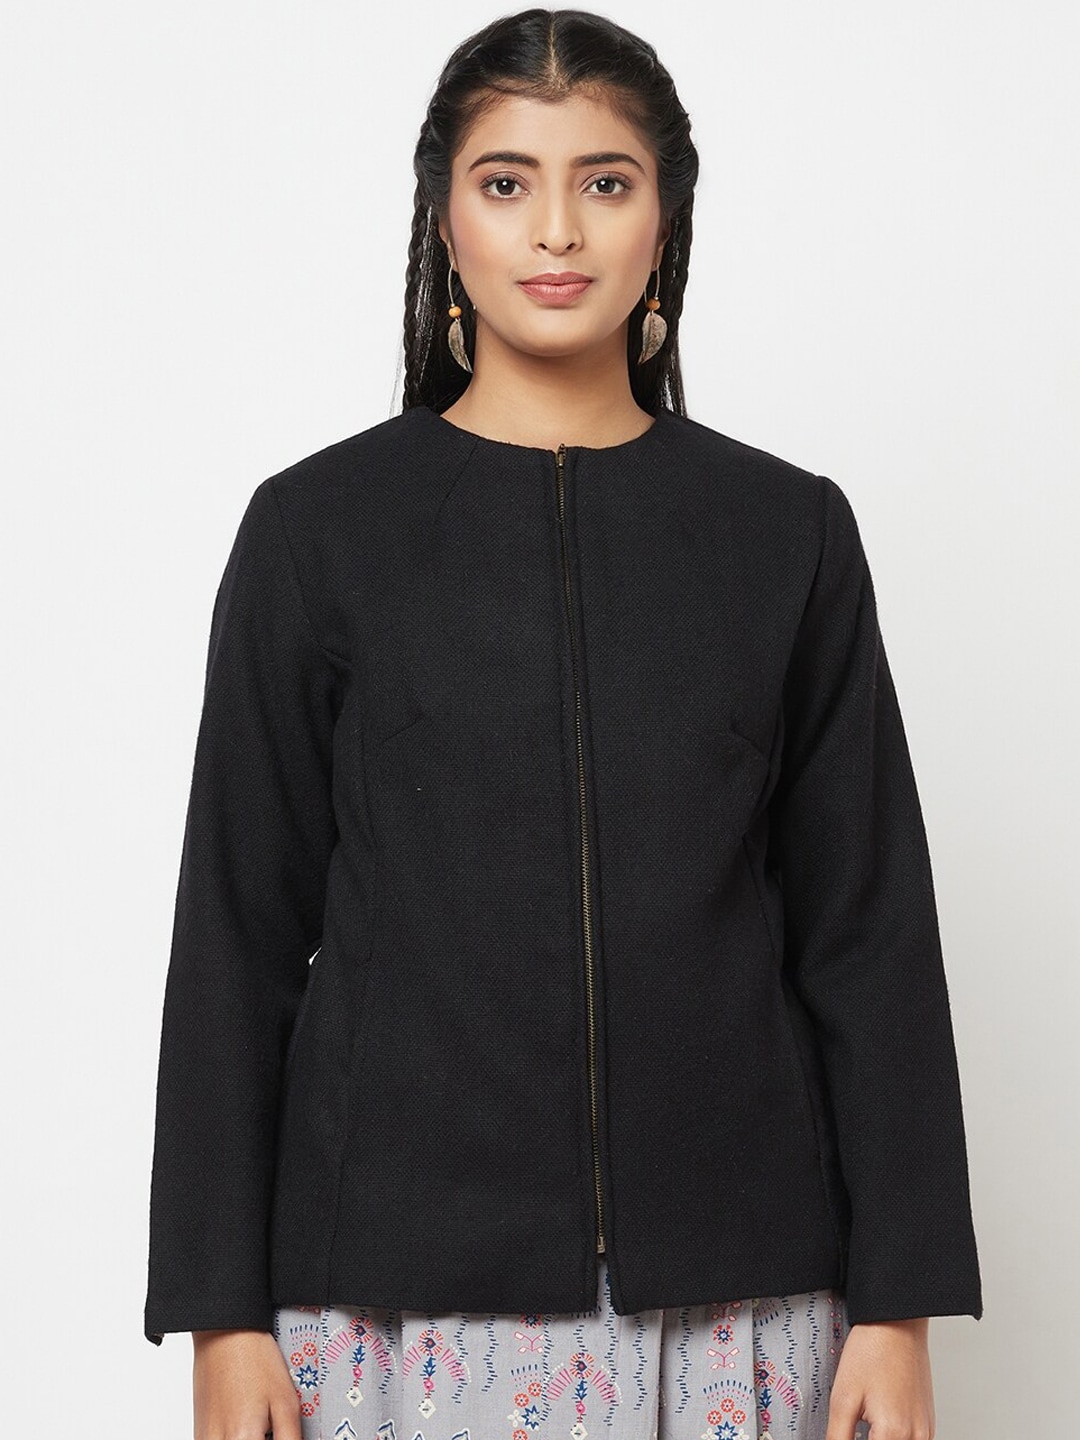 Fabindia Women Black Woolen Tailored Jacket Price in India